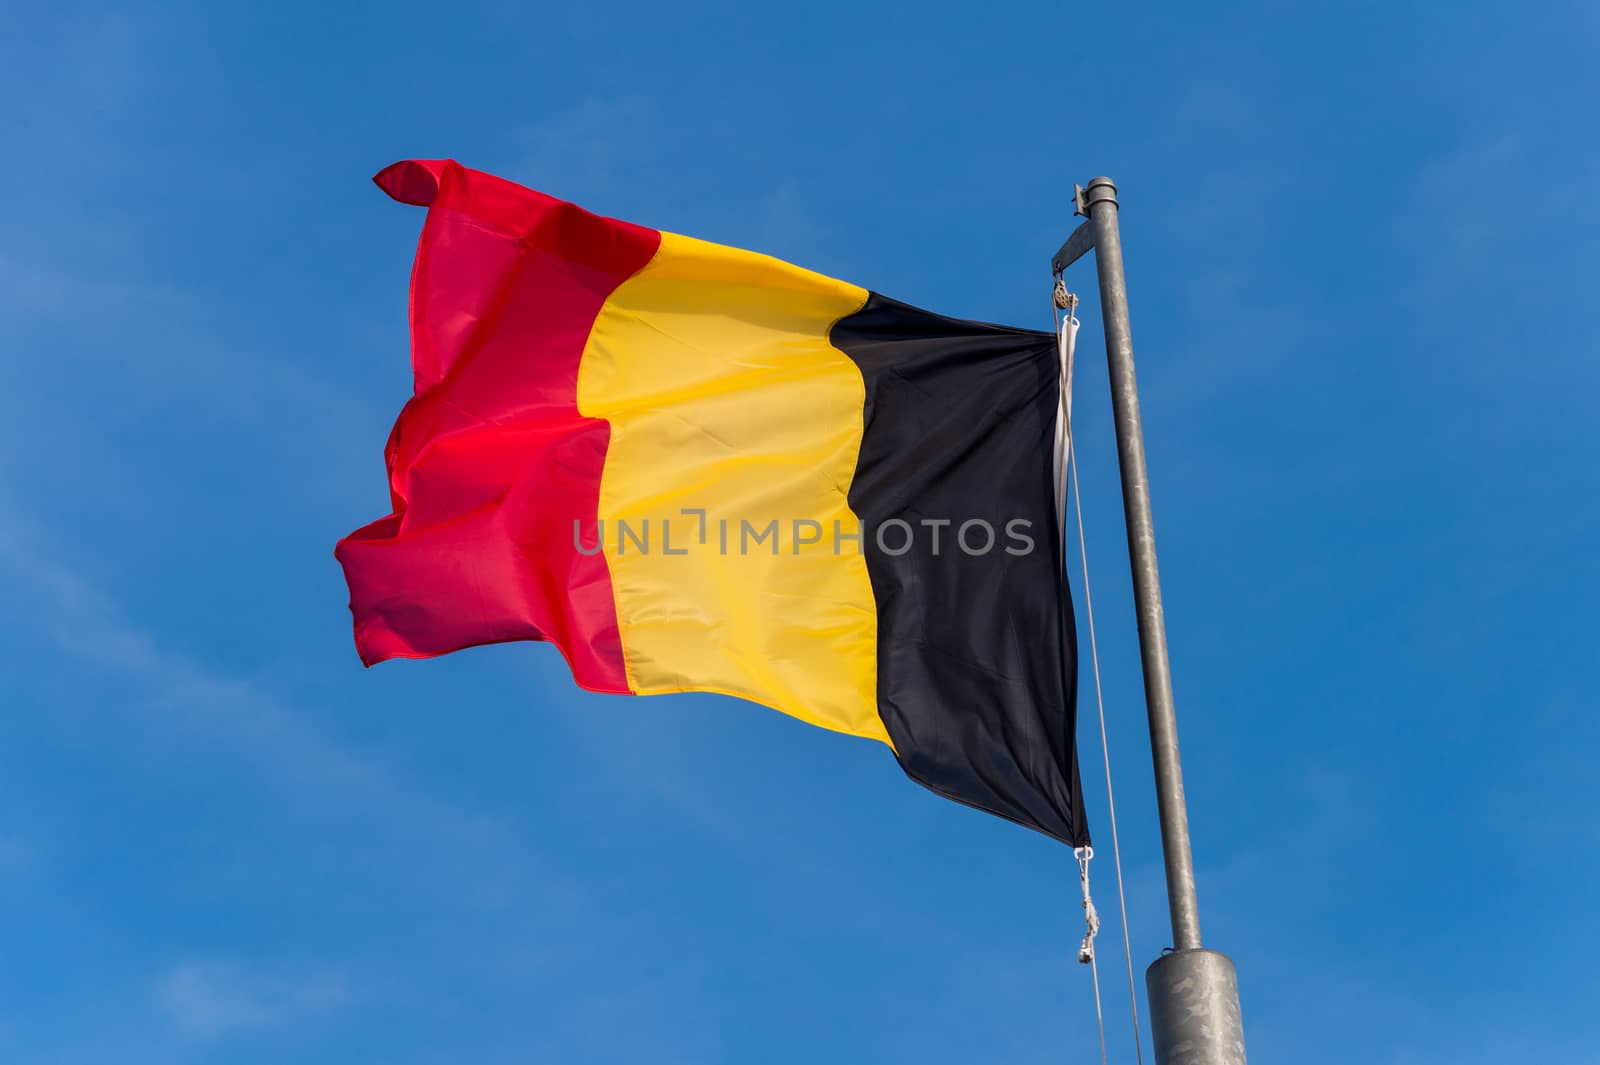 Belgian flag waving against blue sky in Boulogne sur Mer, France by mbruxelle